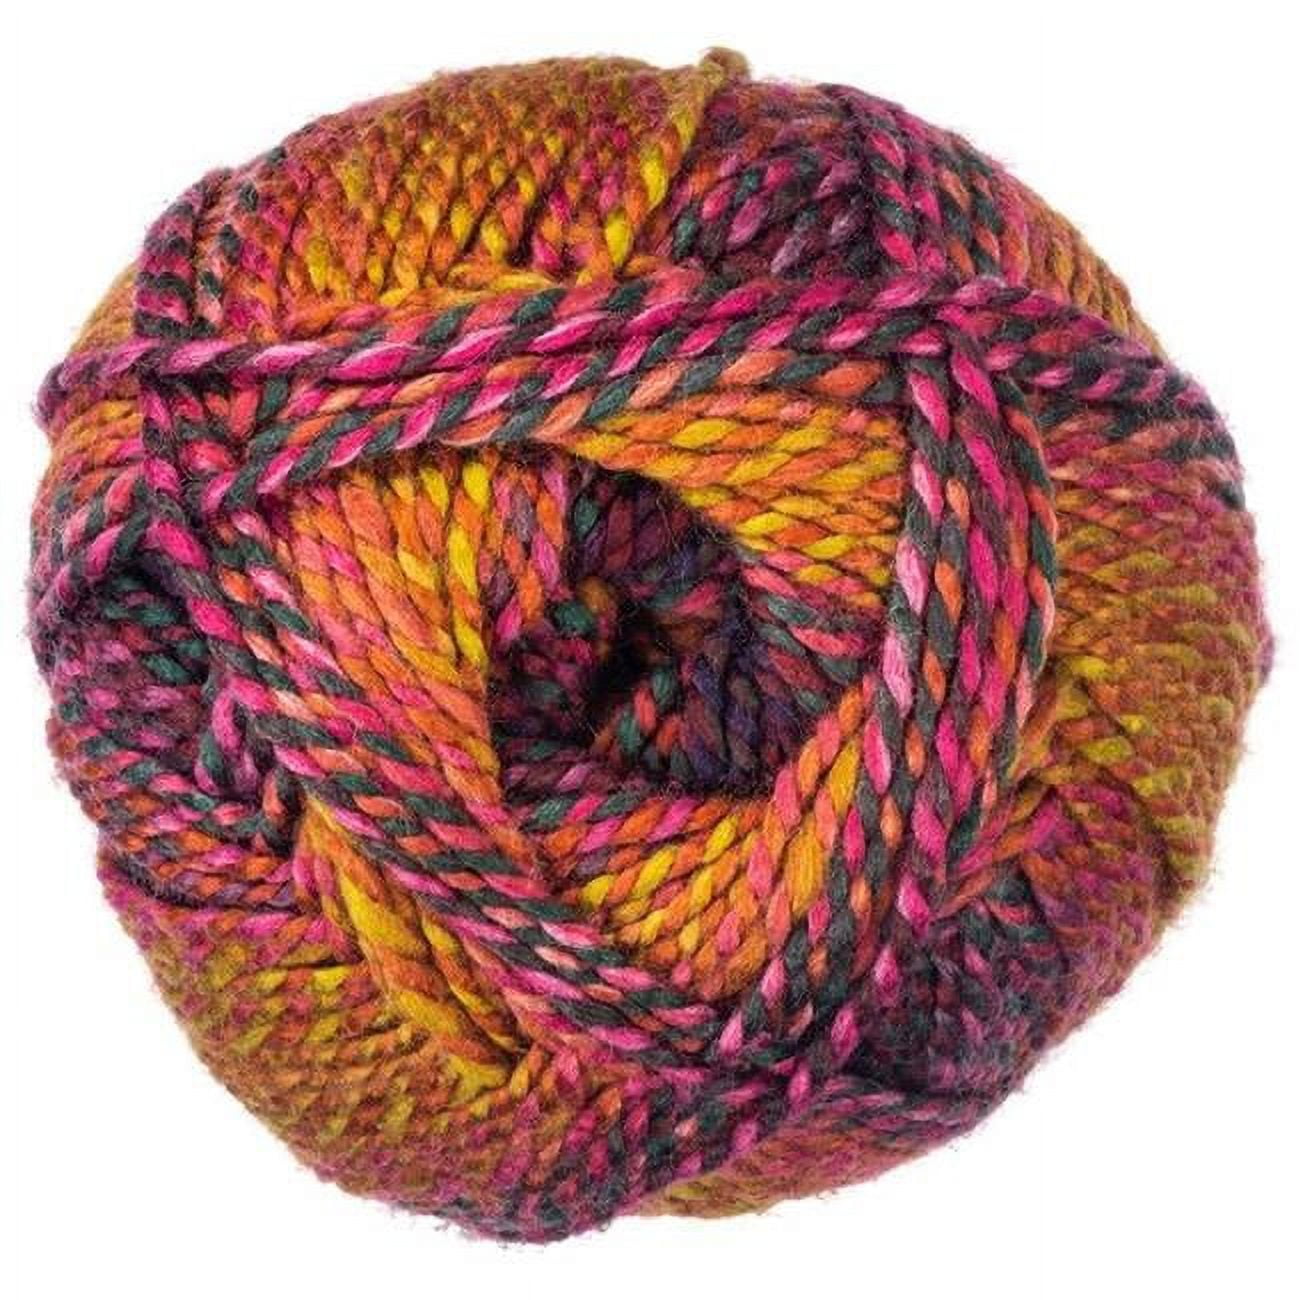 Red Heart Gemstone Agate Yarn - 3 Pack Of 200g/7oz - Acrylic - 5 Bulky -  312 Yards - Knitting/crochet : Target